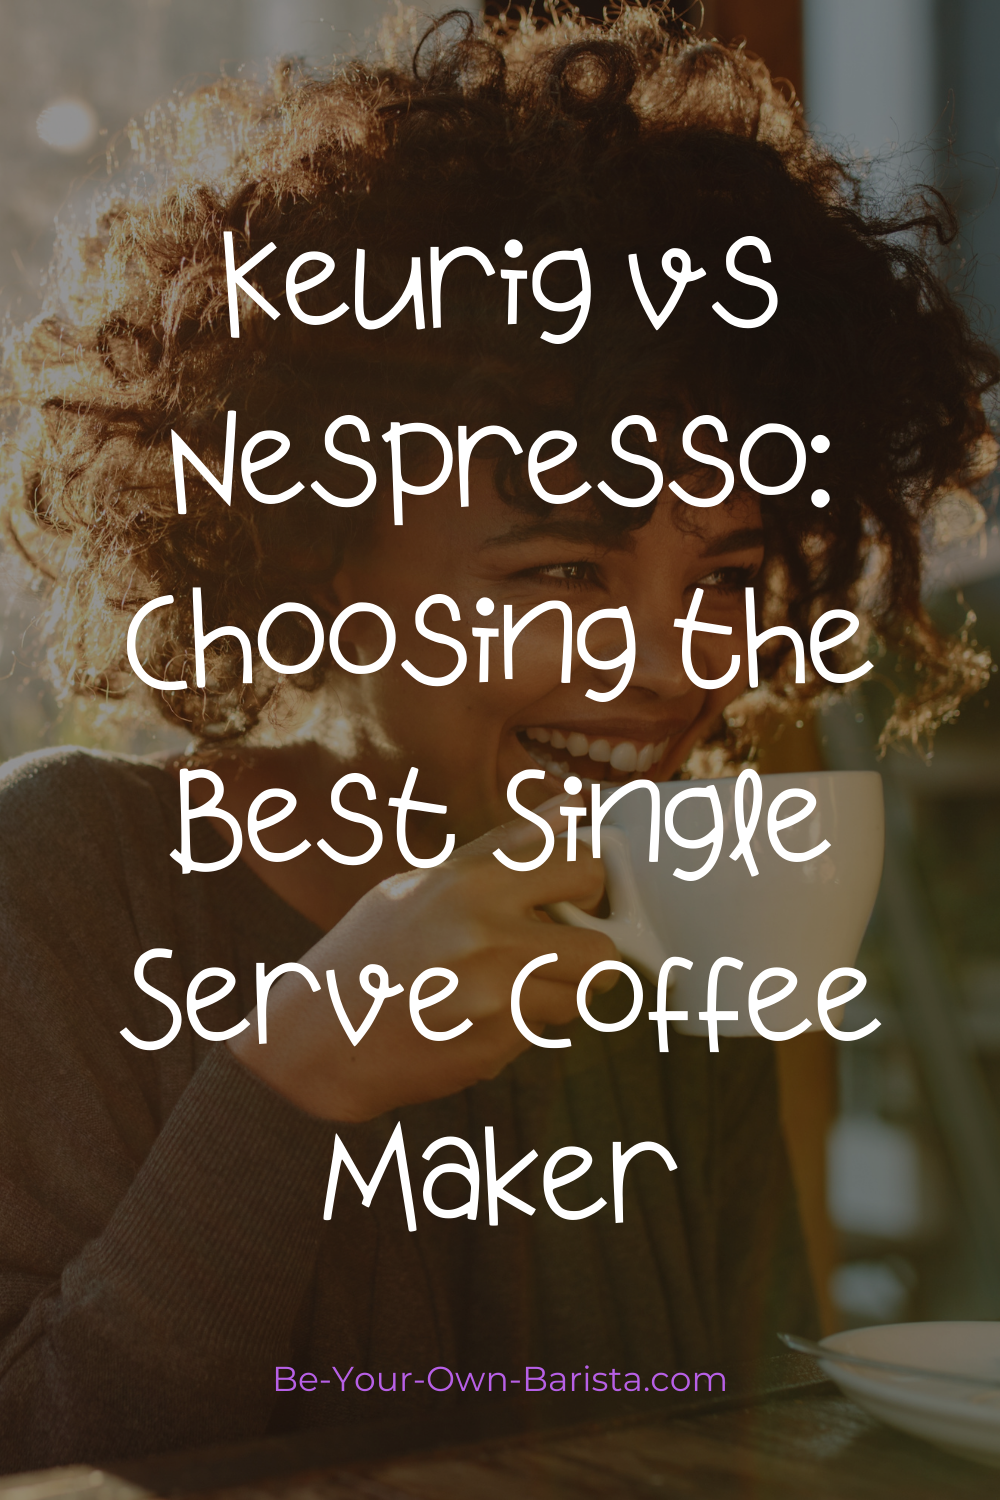 Keurig vs Nespresso_Choosing the Best Single Serve Coffee Maker